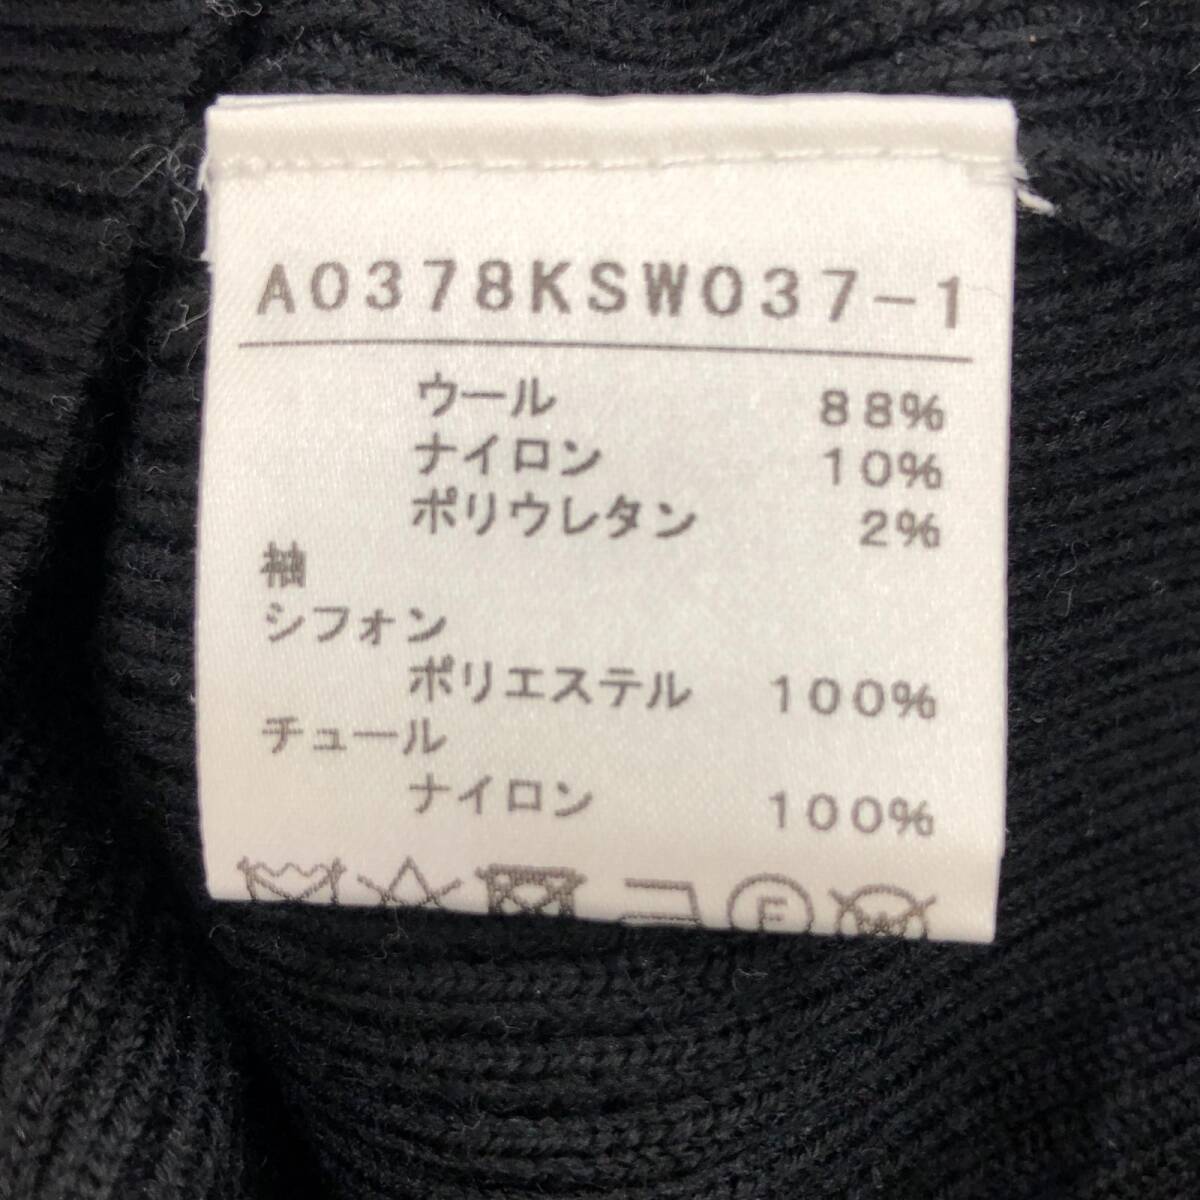 yu. packet OK martinique Martini -k wool .chu-ru sleeve knitted size inscription none / black lady's 